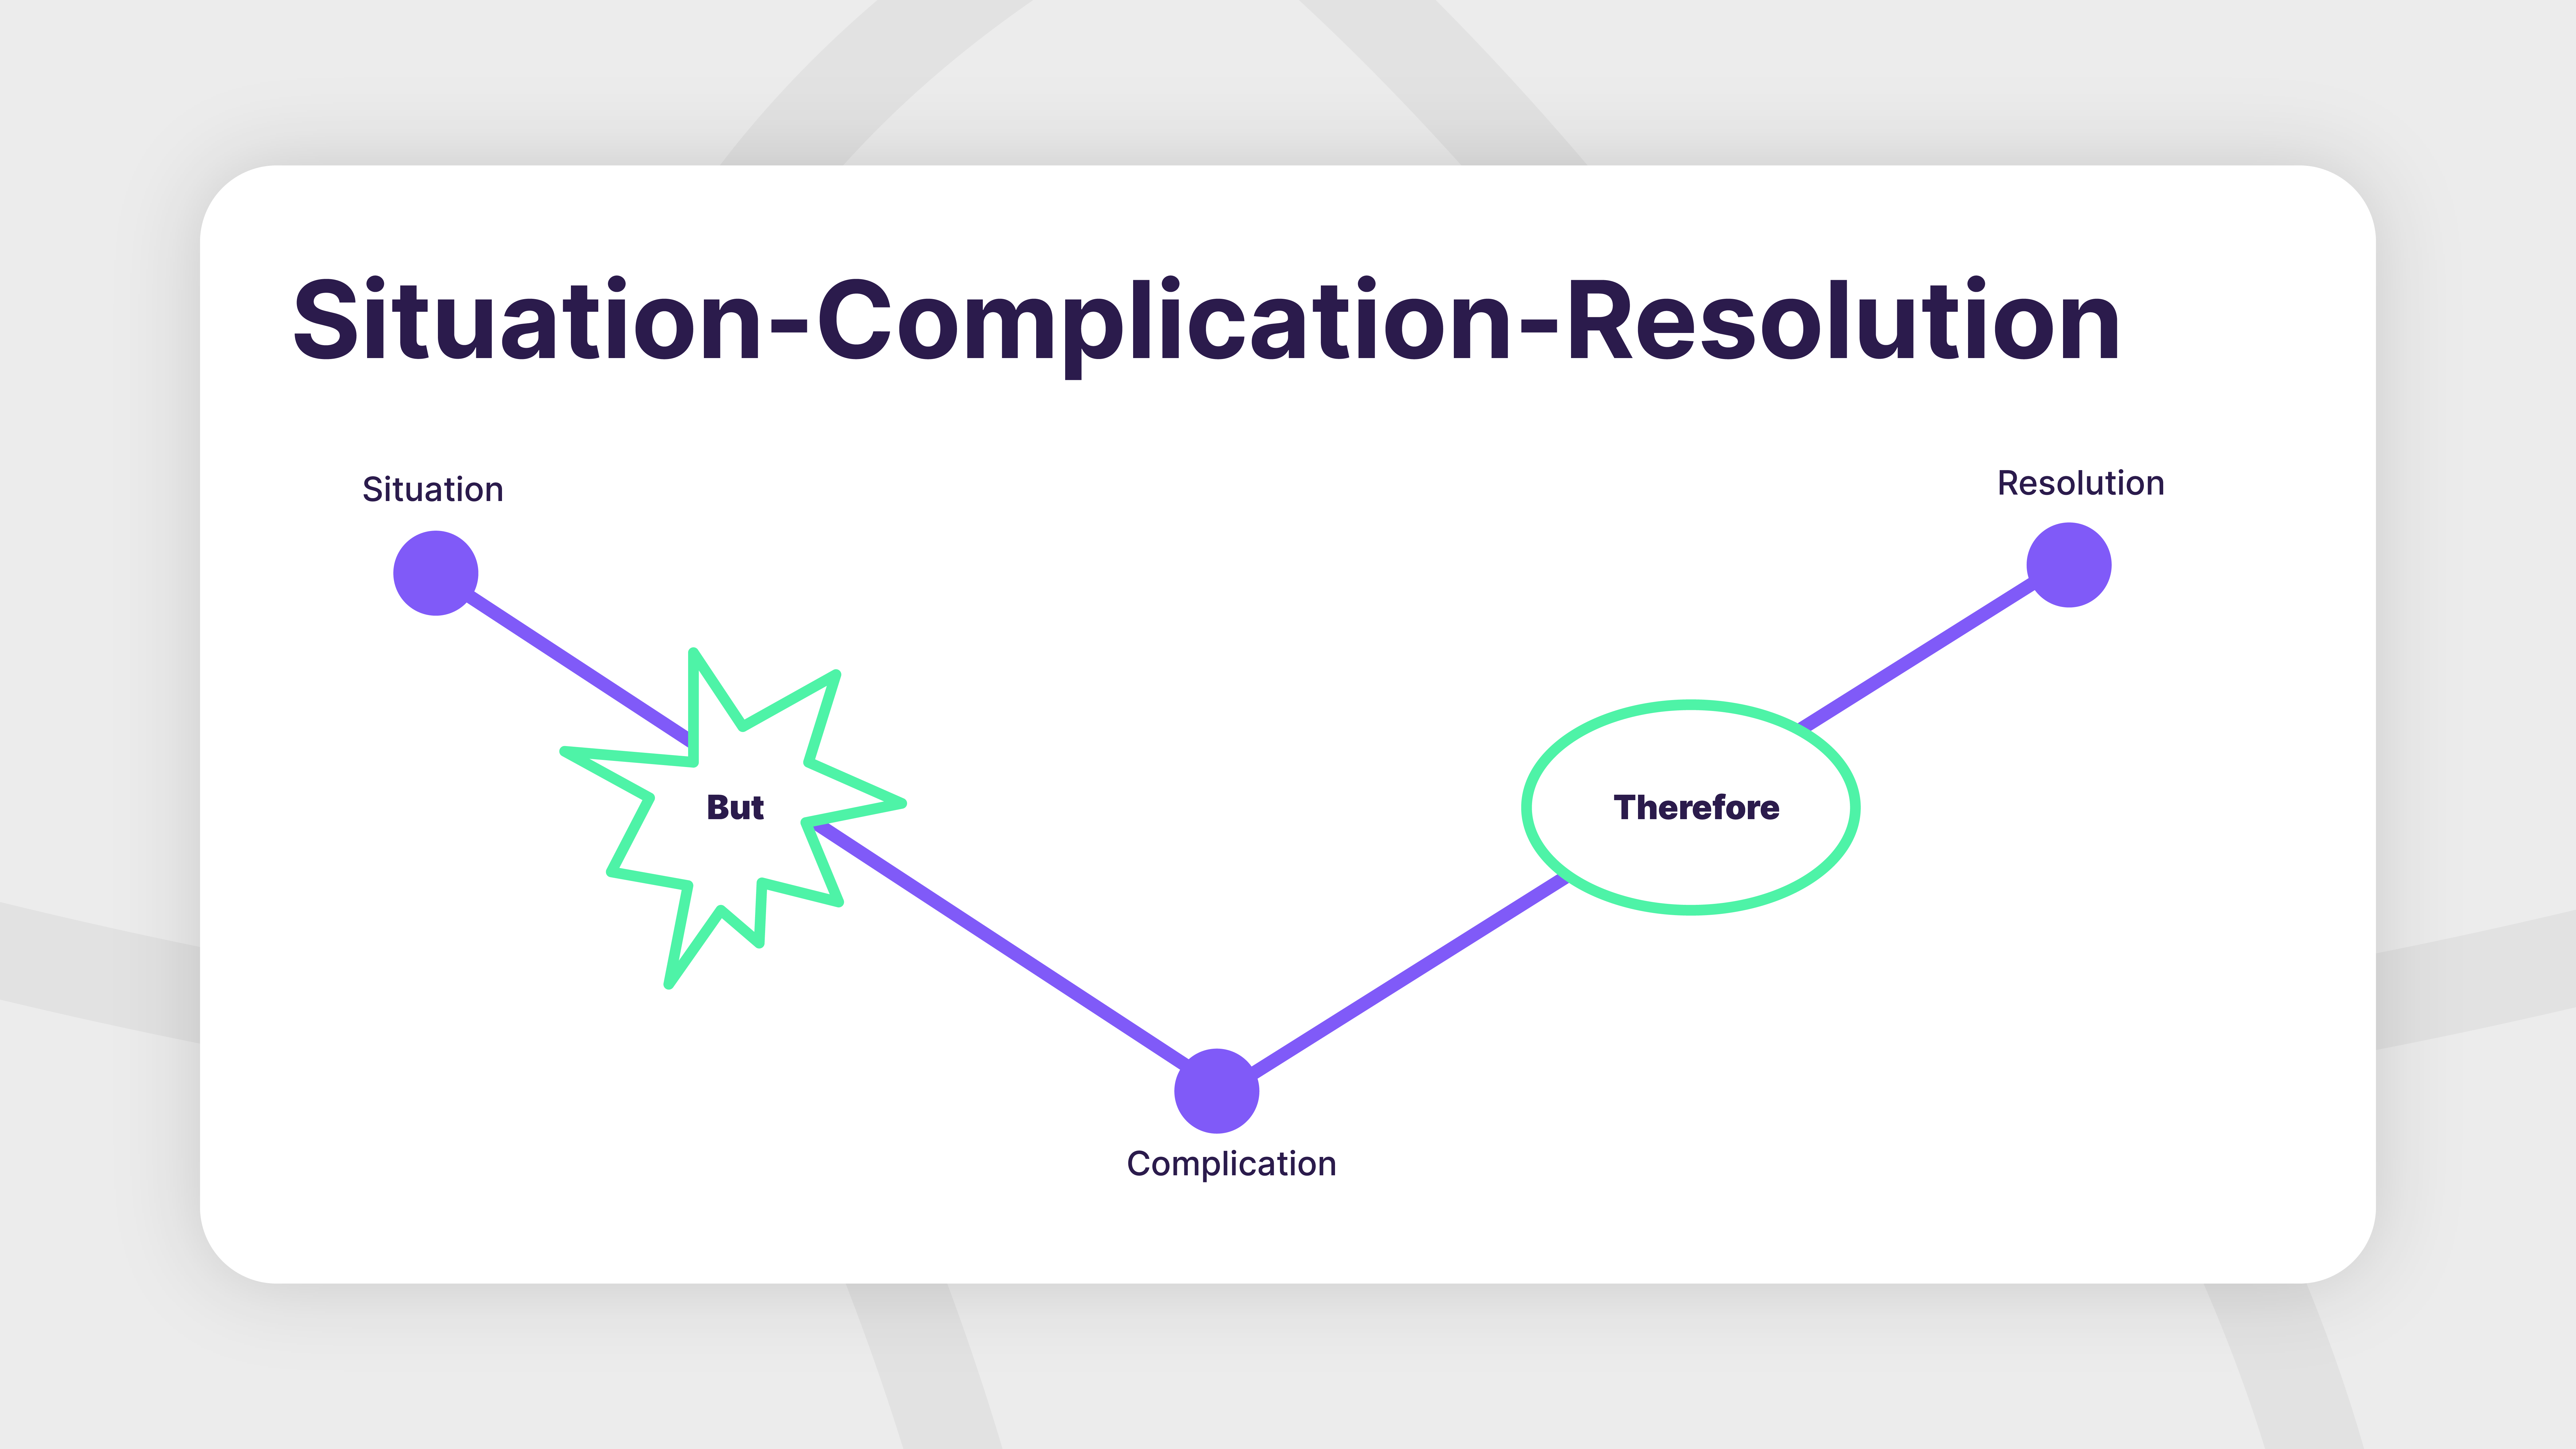 Situation-complication-resolution presentation narrative